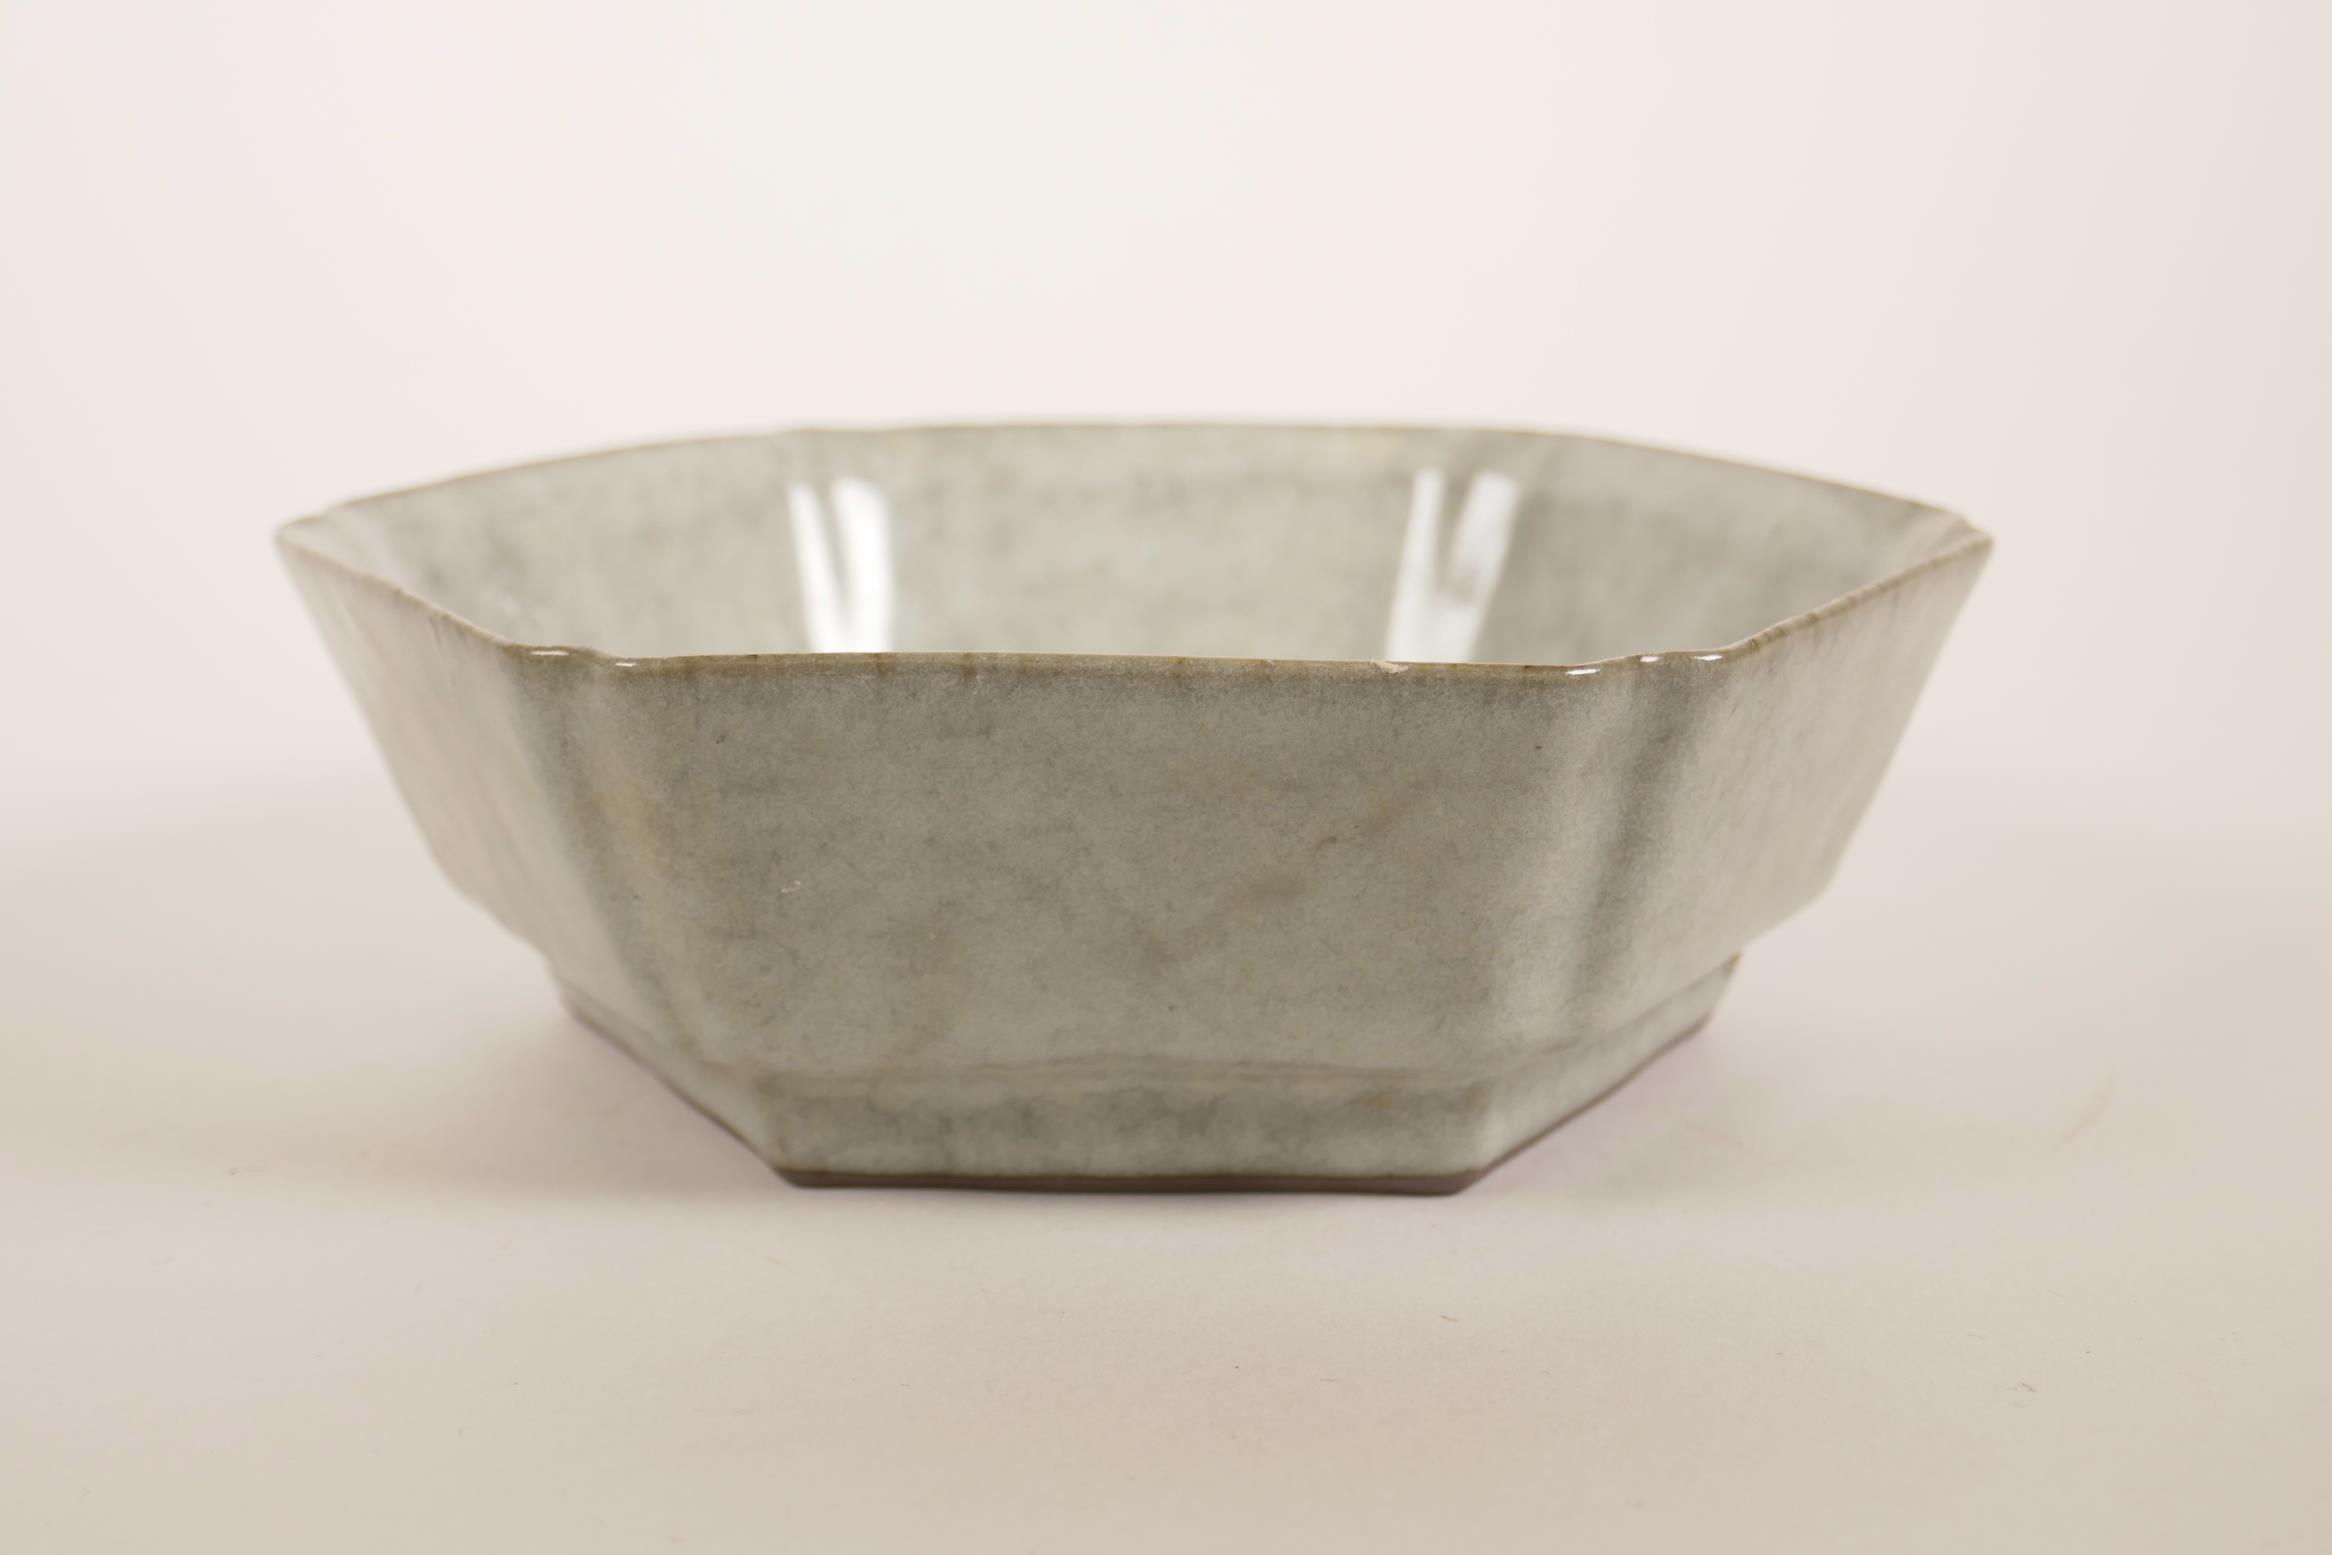 A Chinese celadon glazed hexagonal pottery dish, 6½" x 6½"